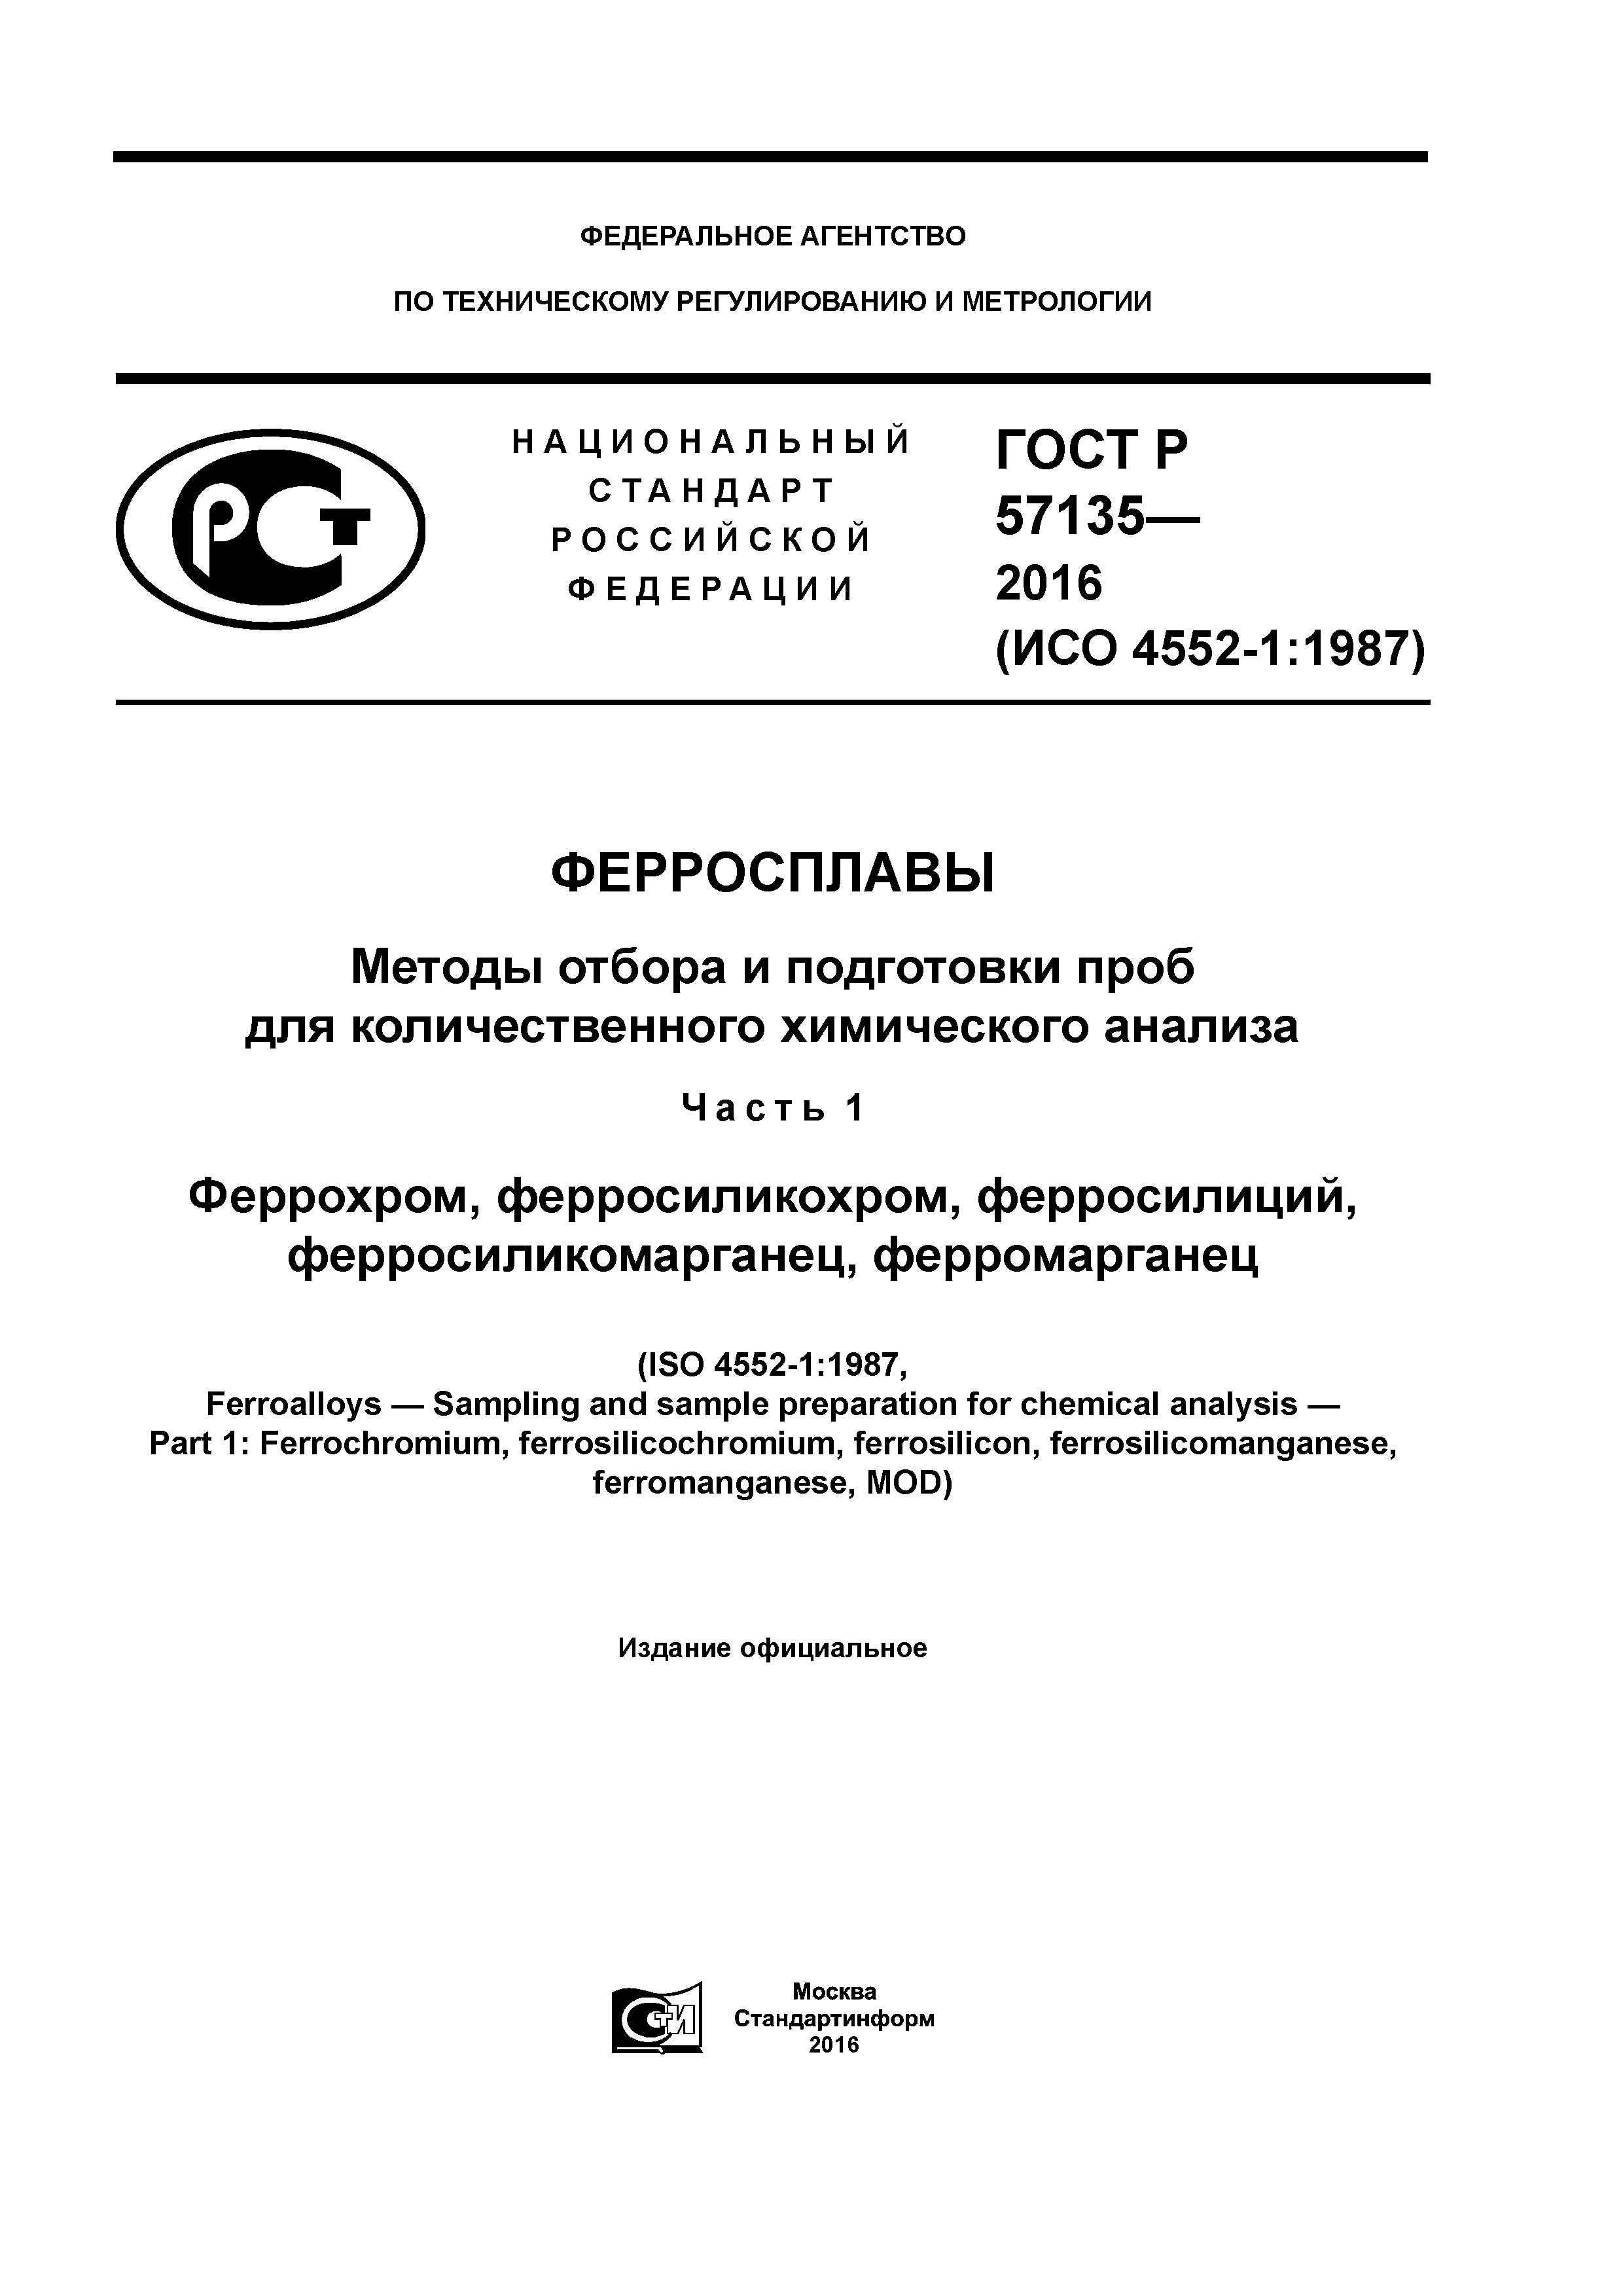 ГОСТ Р 57135-2016